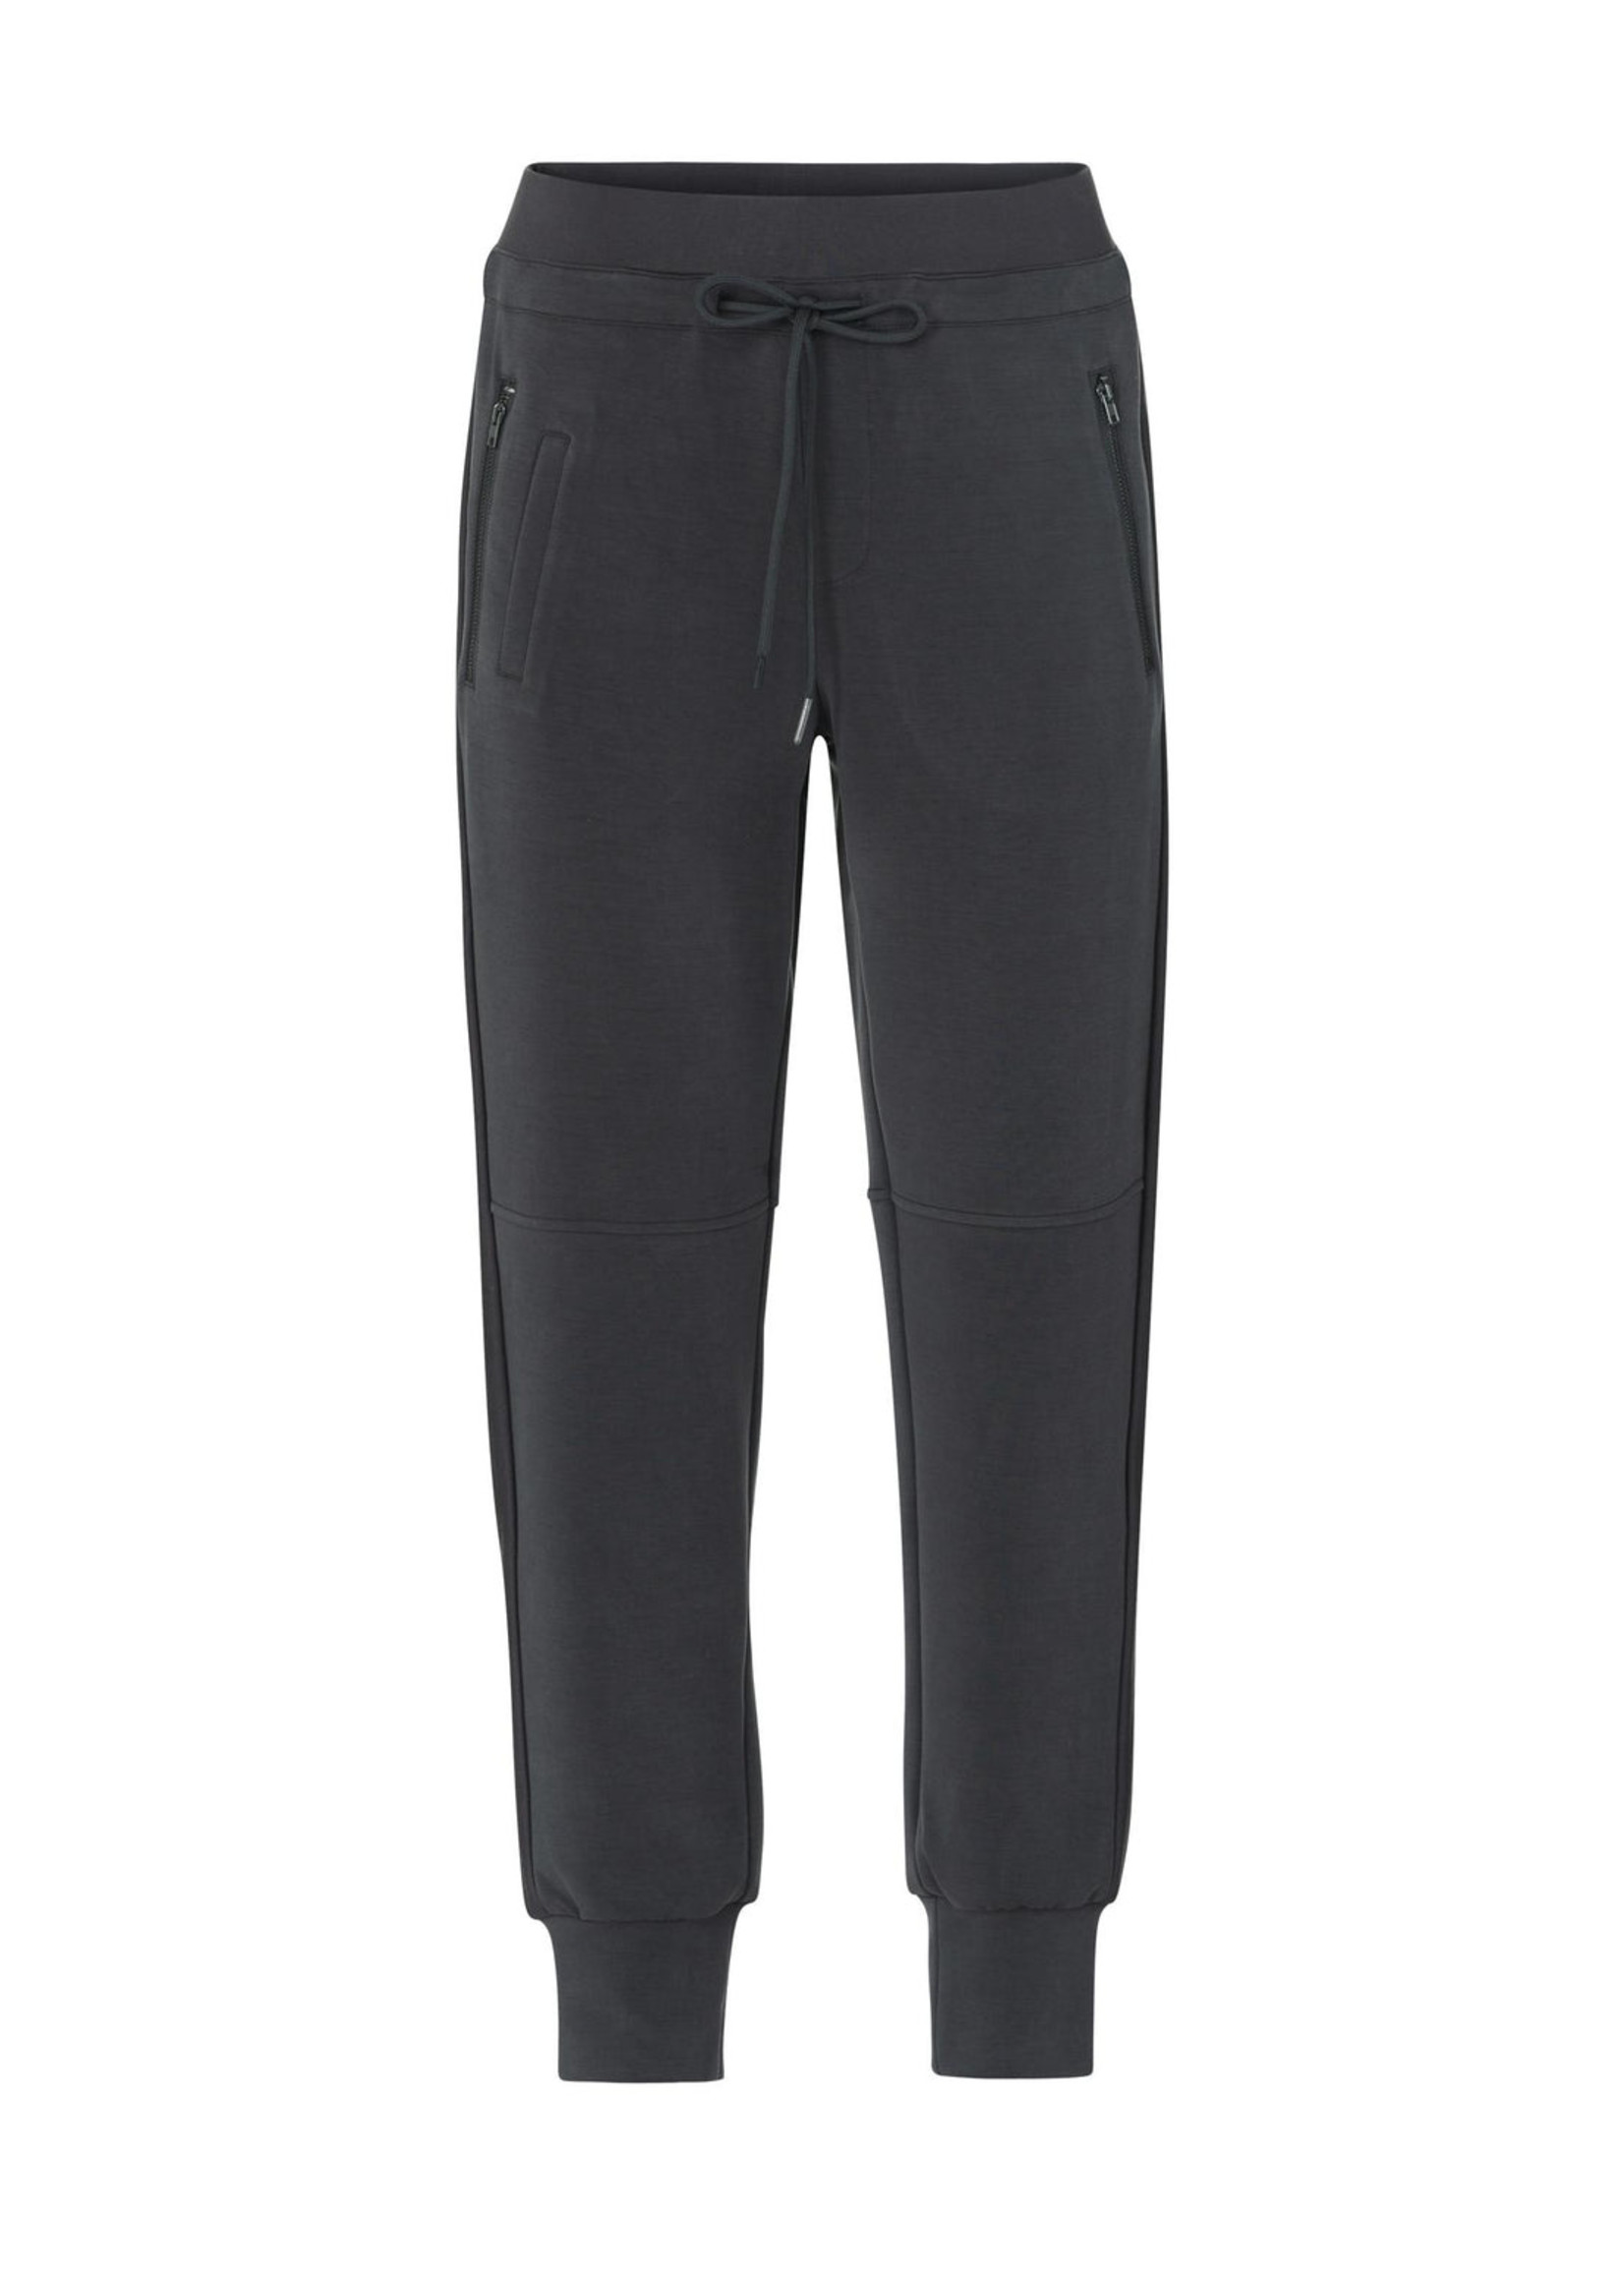 YAYA Yaya - Scuba Jogging trousers in a modal blend with zippers